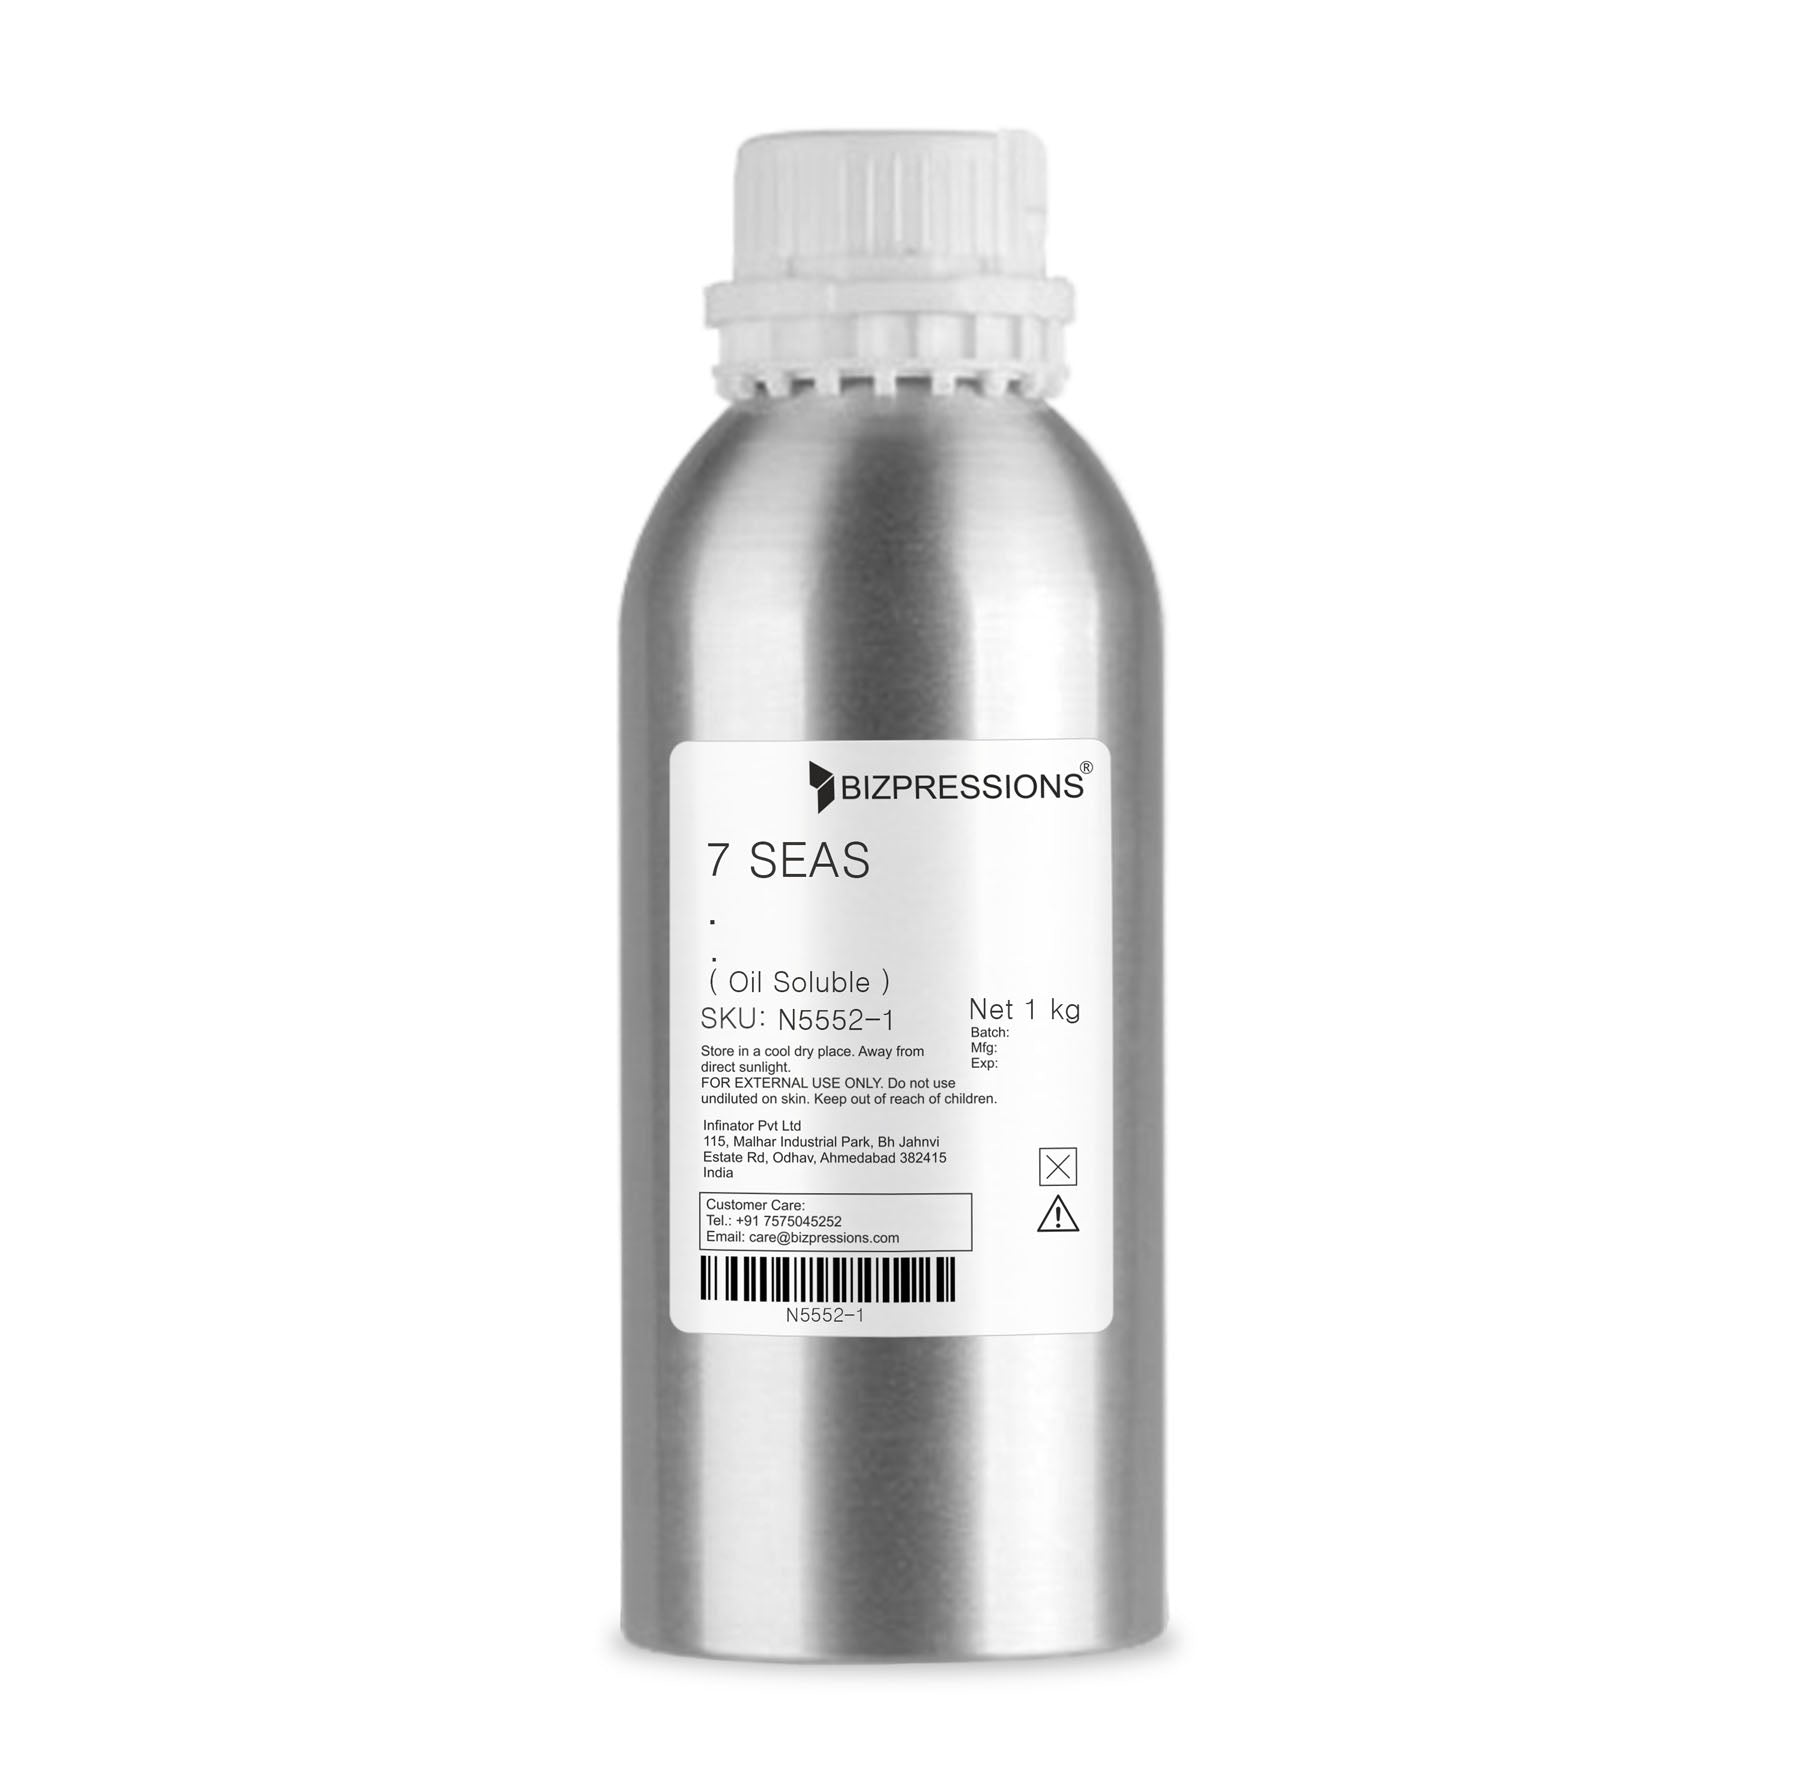 7 SEAS - Fragrance ( Oil Soluble ) - 1 kg